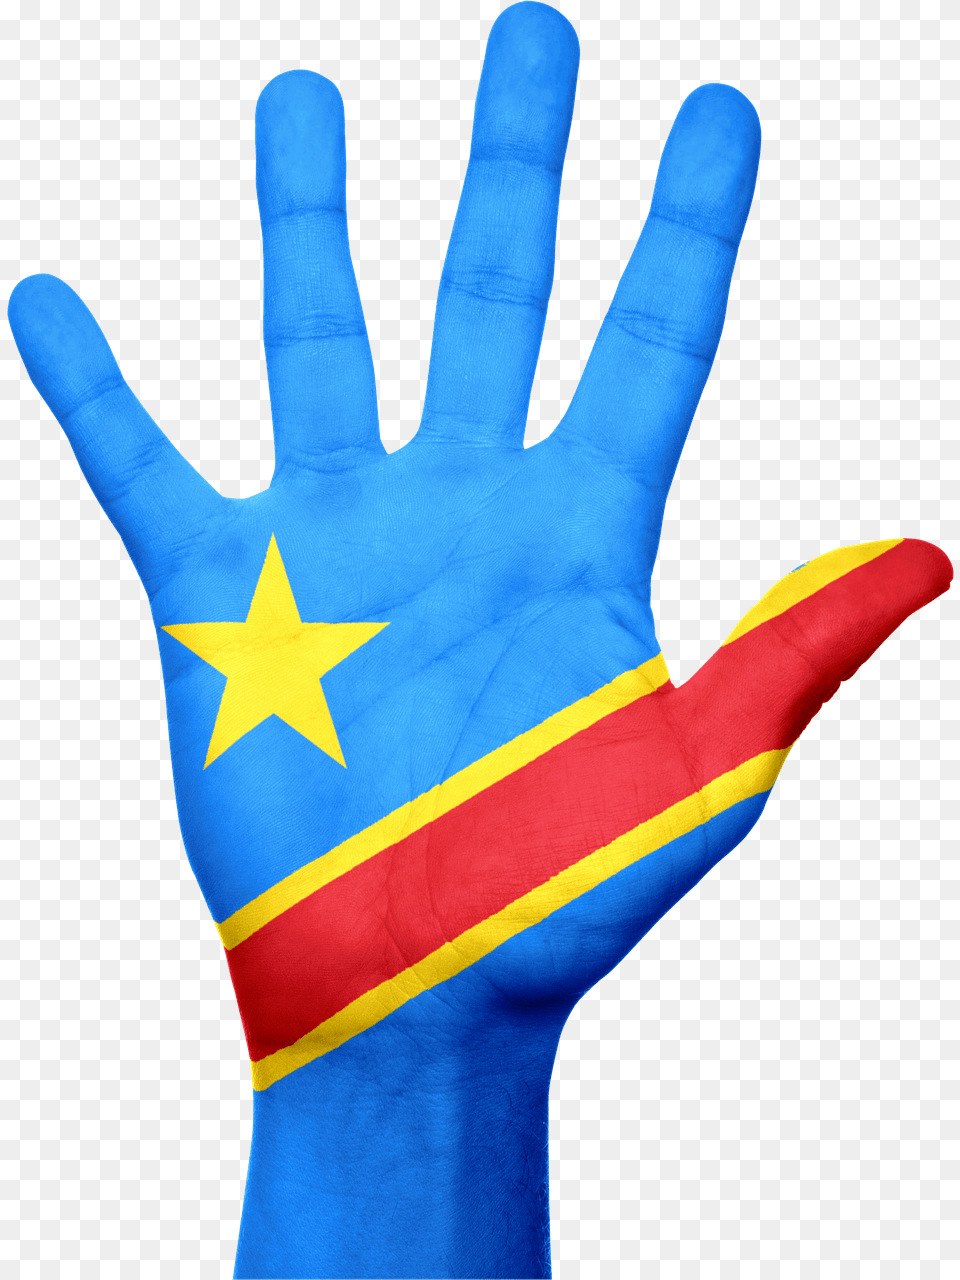 Drapeau National Du Rwanda, Clothing, Glove, Body Part, Finger Png Image